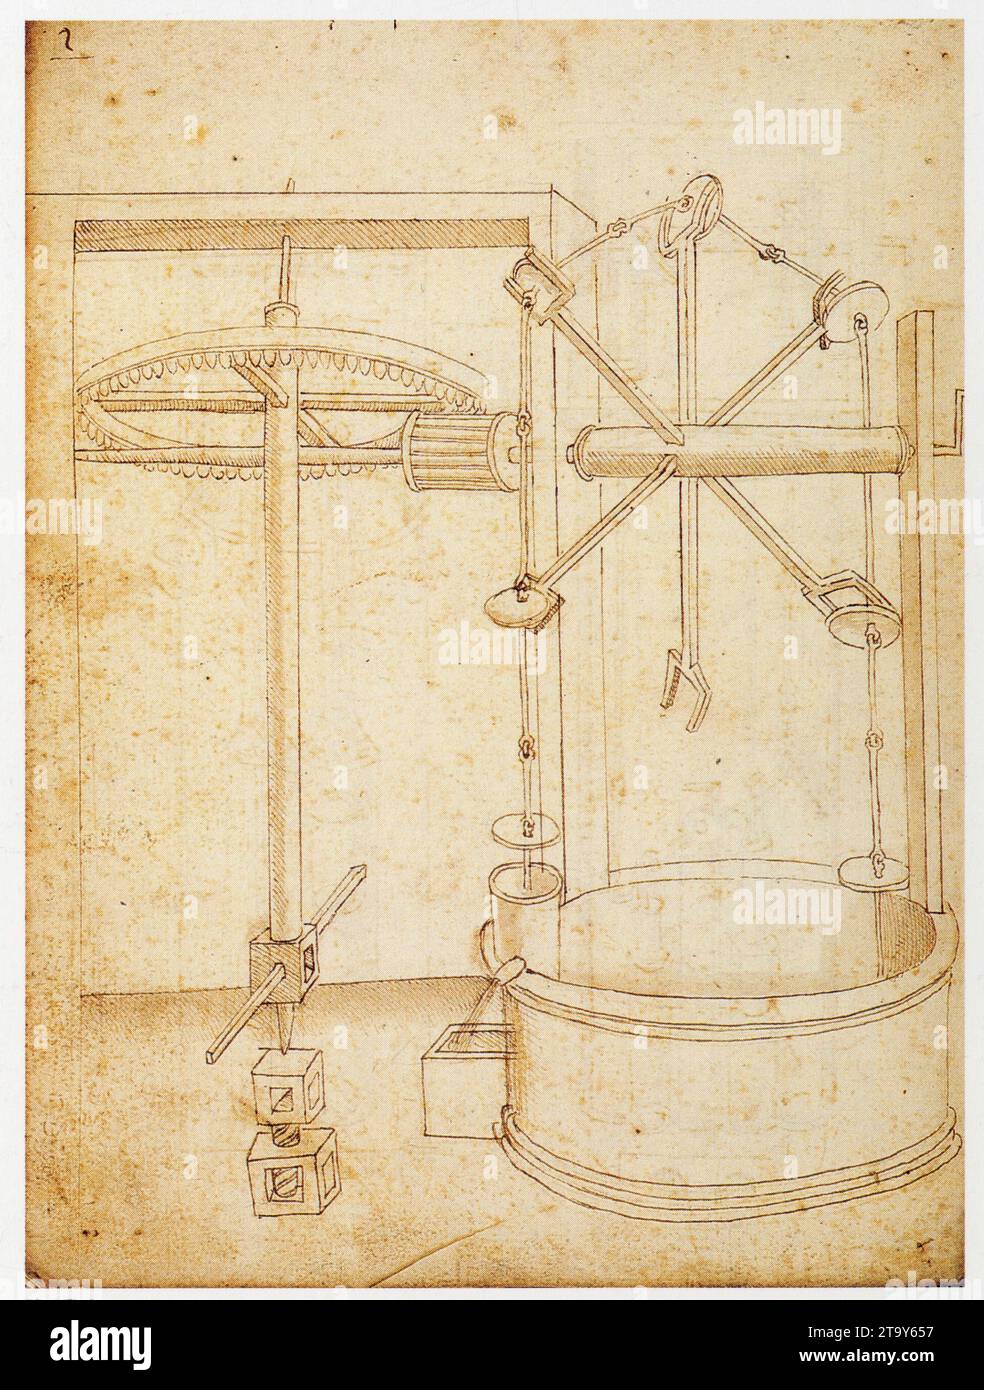 File:Pompe a vin a piston.jpg - Wikimedia Commons